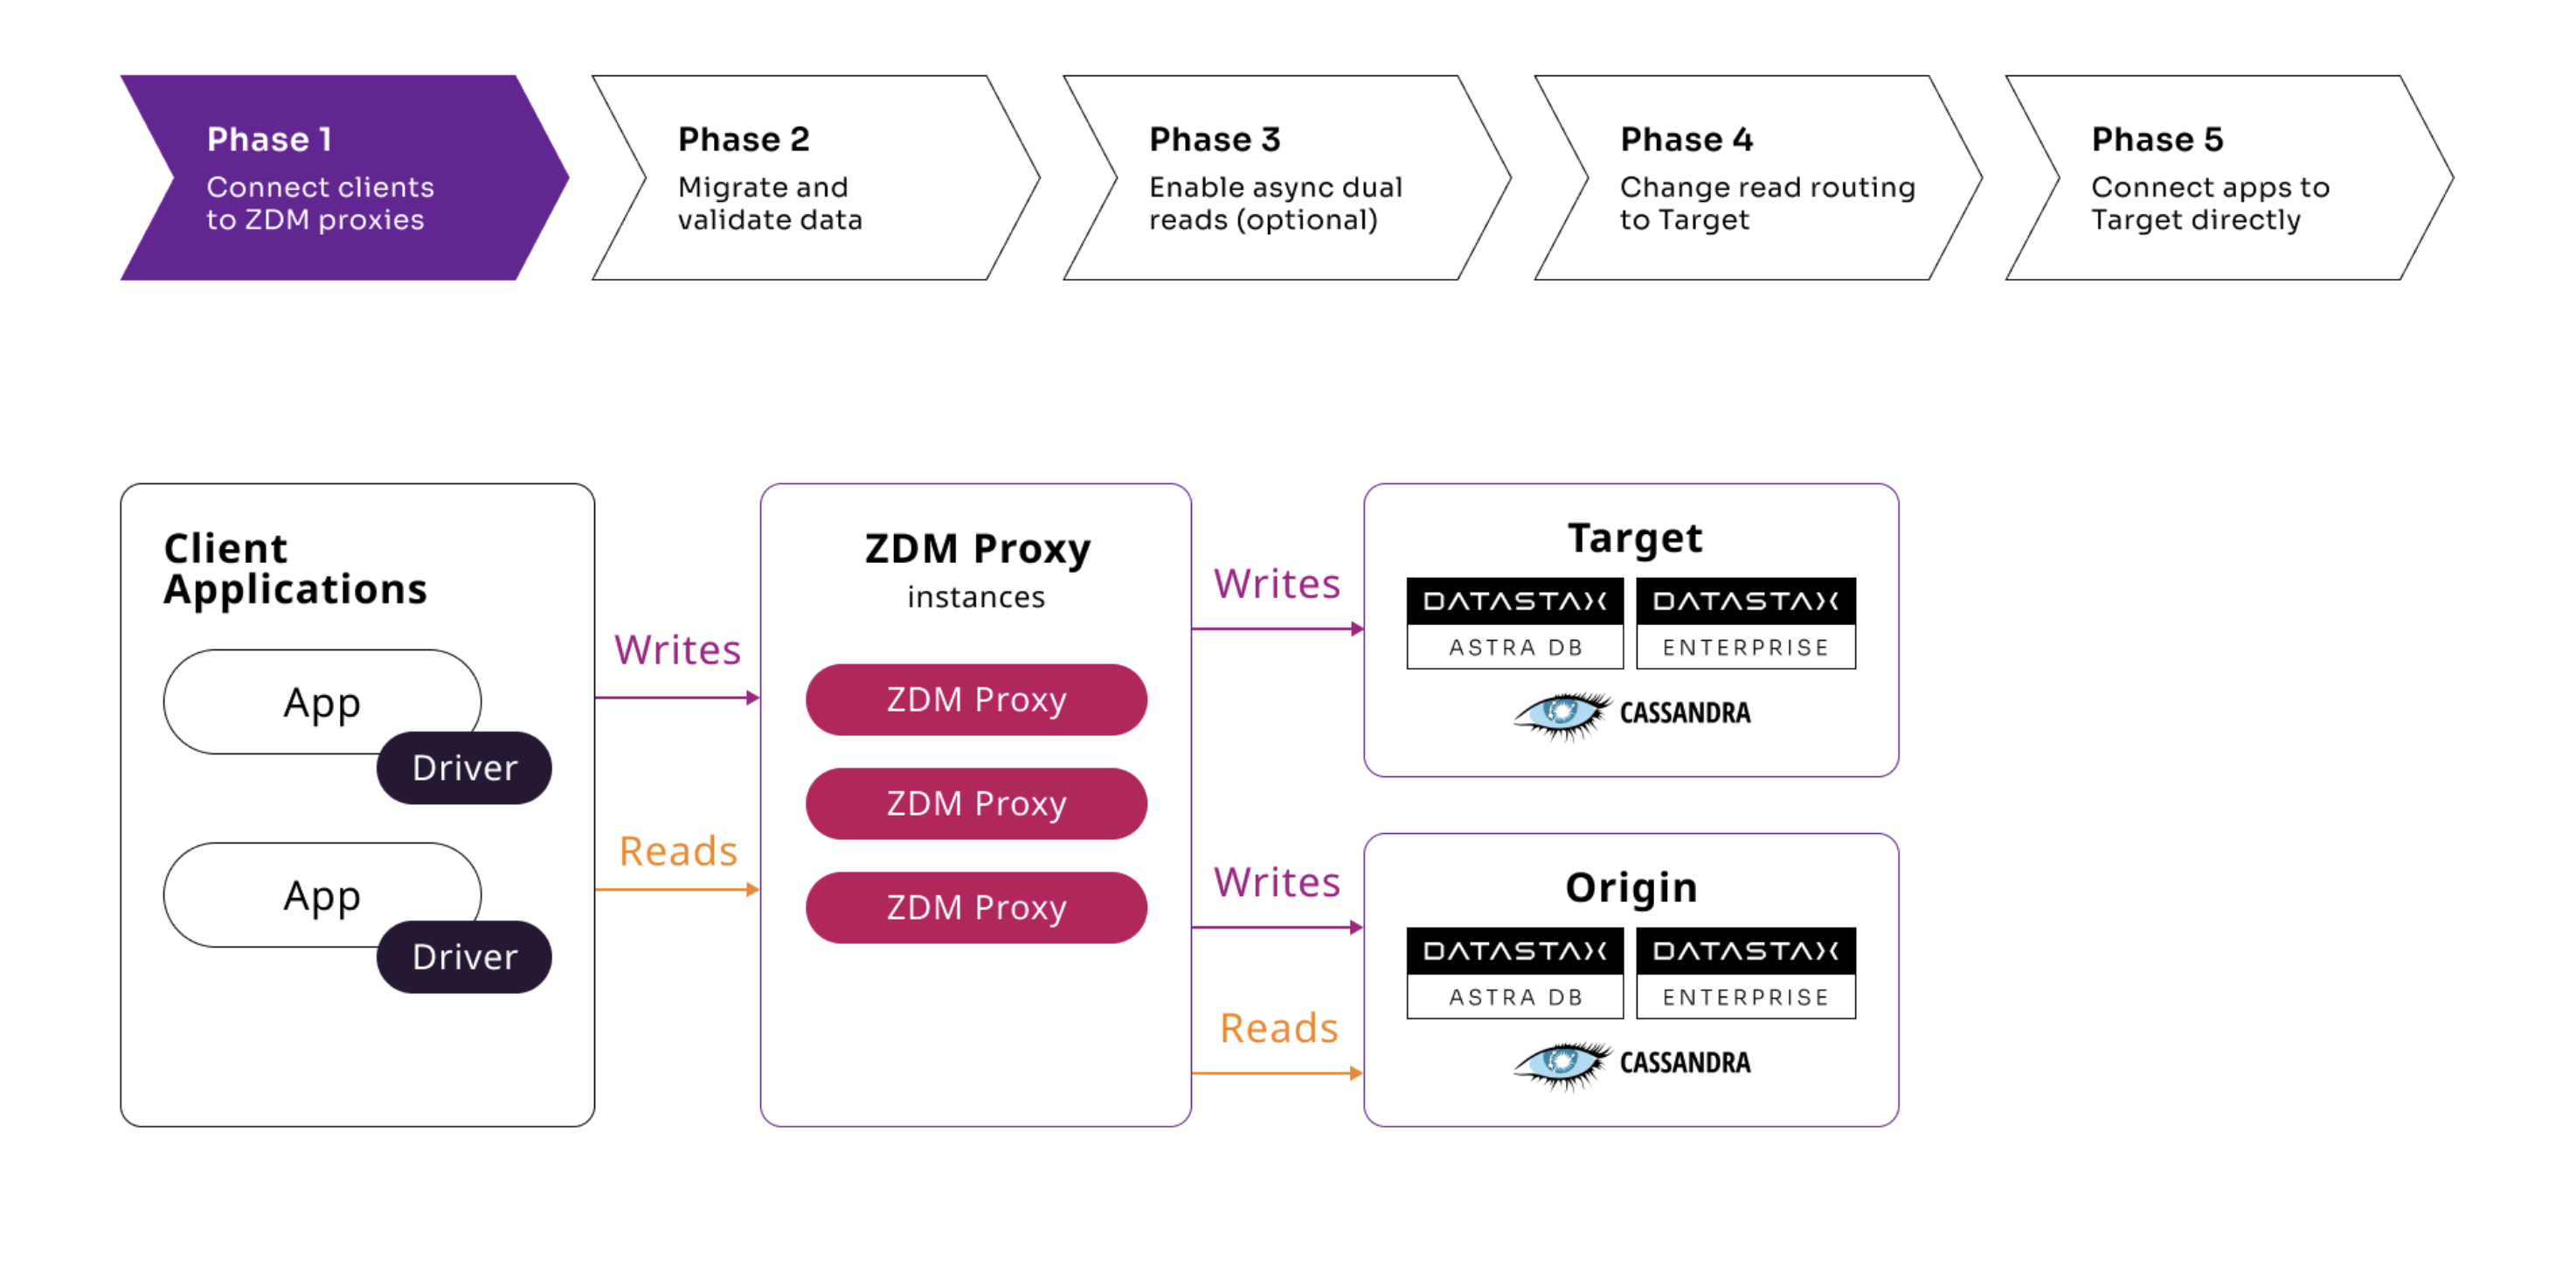 Phase 1 diagram shows deployed ZDM Proxy instances